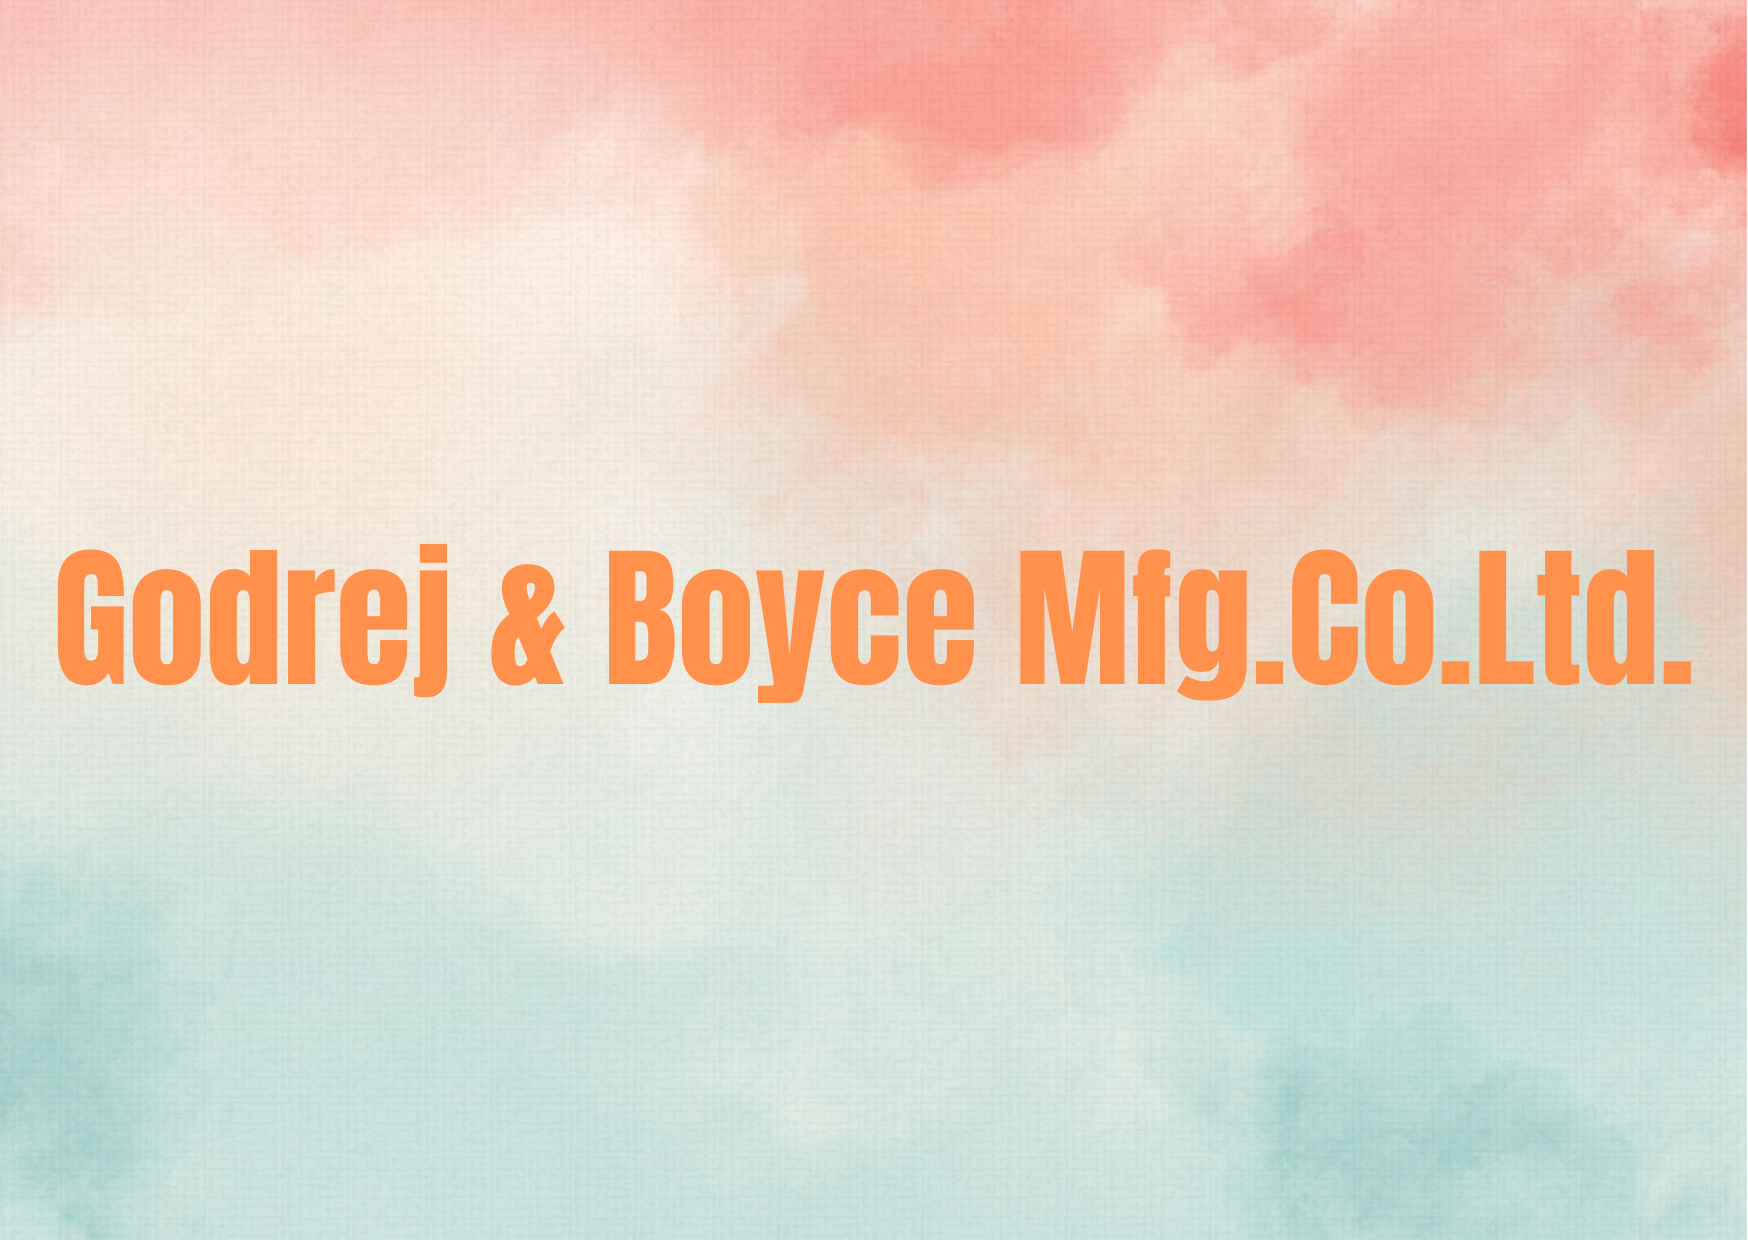 Godrej & Boyce Mfg.Co.Ltd. 